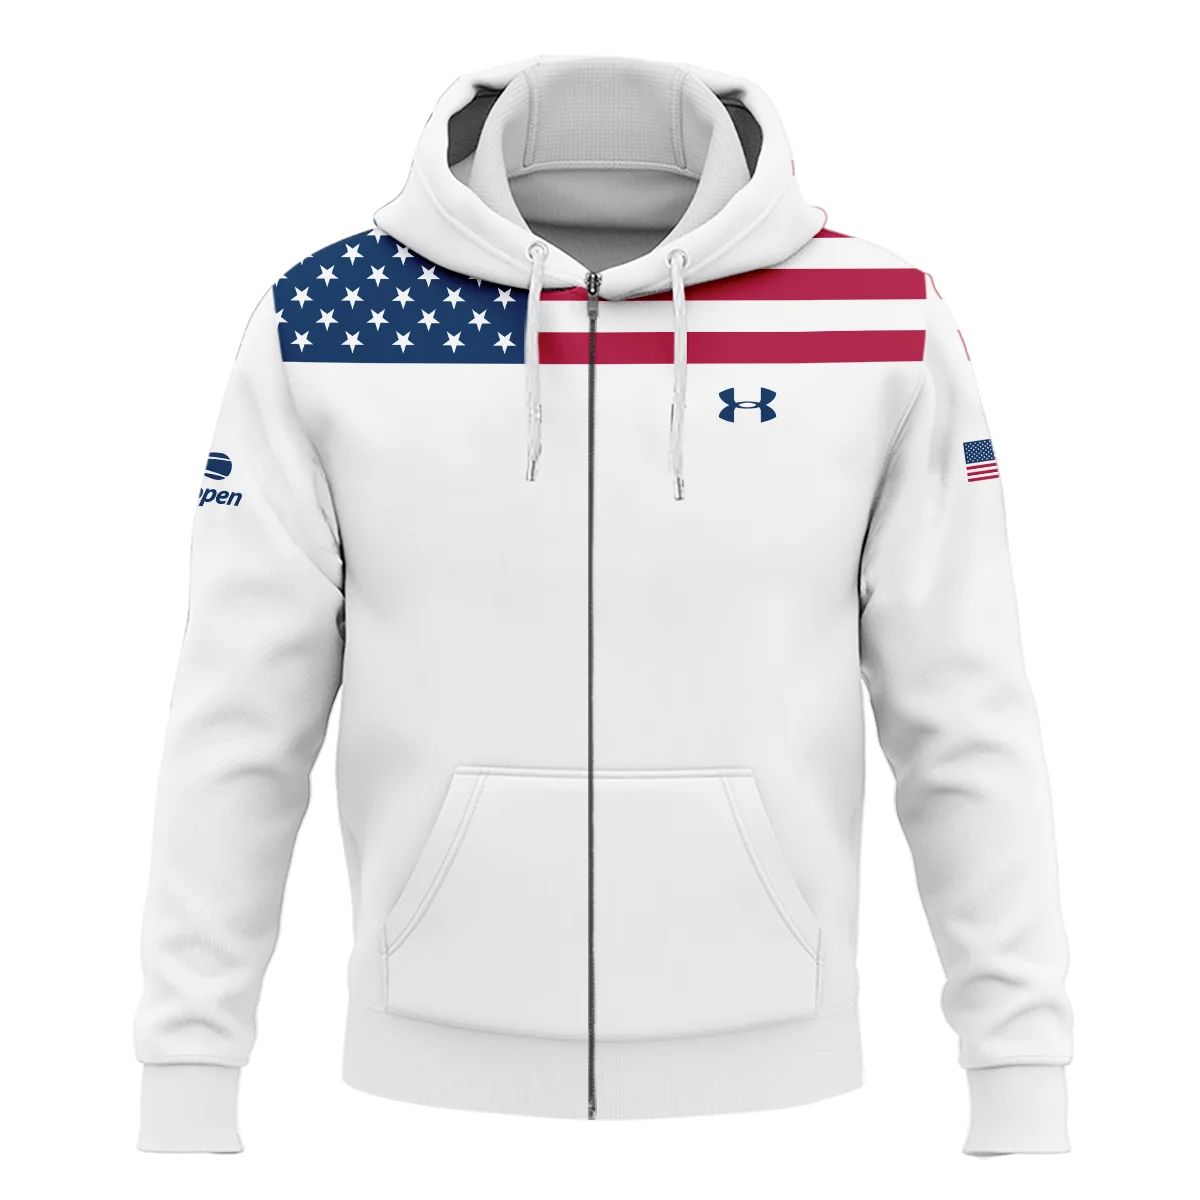 US Open Tennis Champions Under Armour USA Flag White Polo Shirt Mandarin Collar Polo Shirt